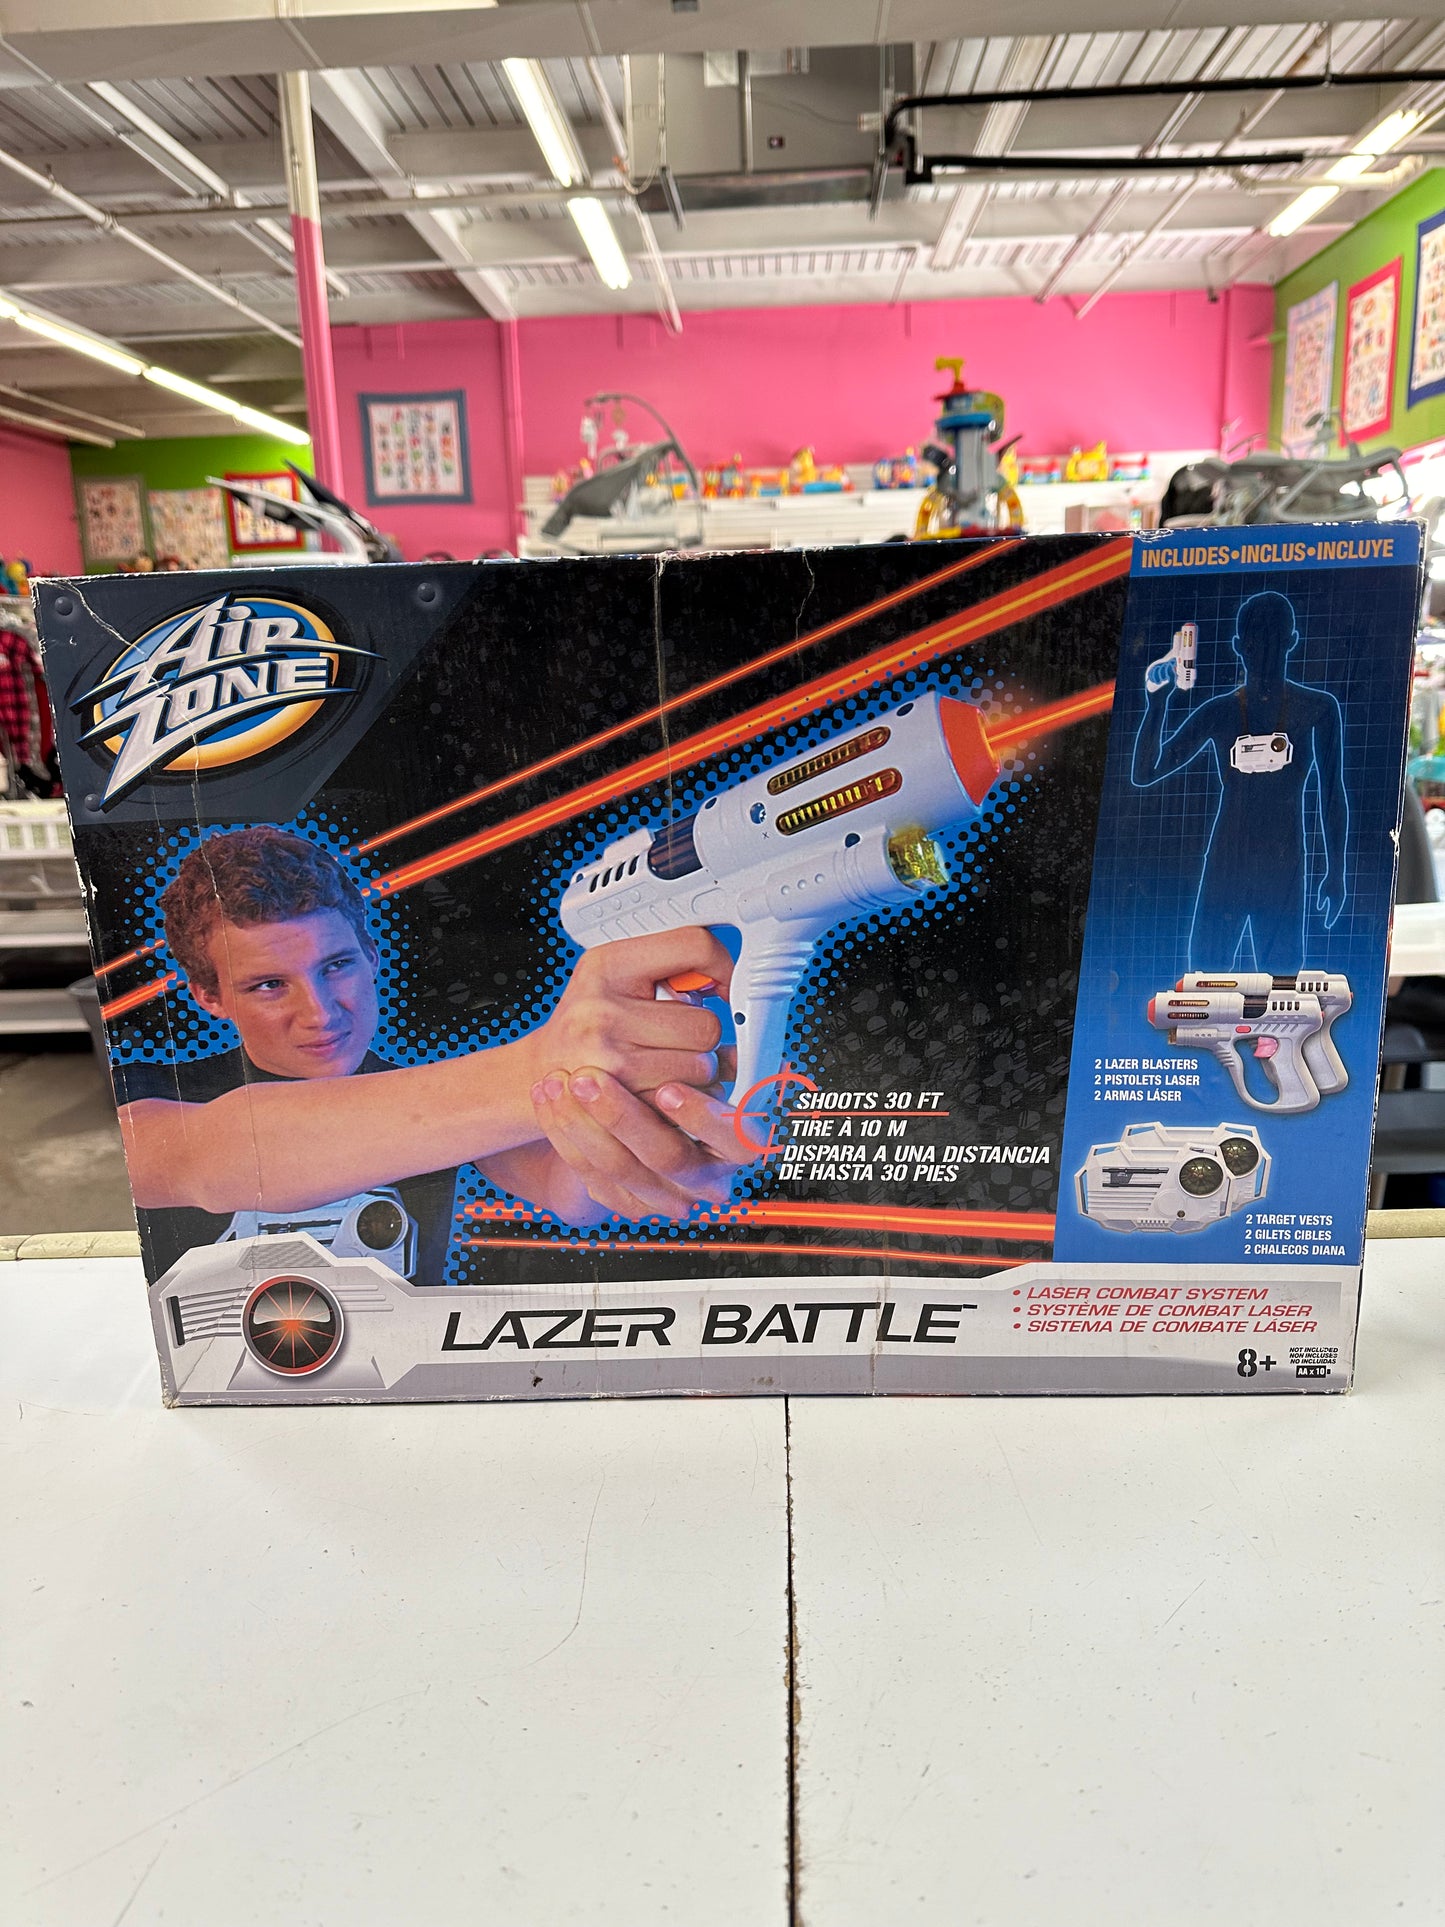 New Air Zone Lazer Battle